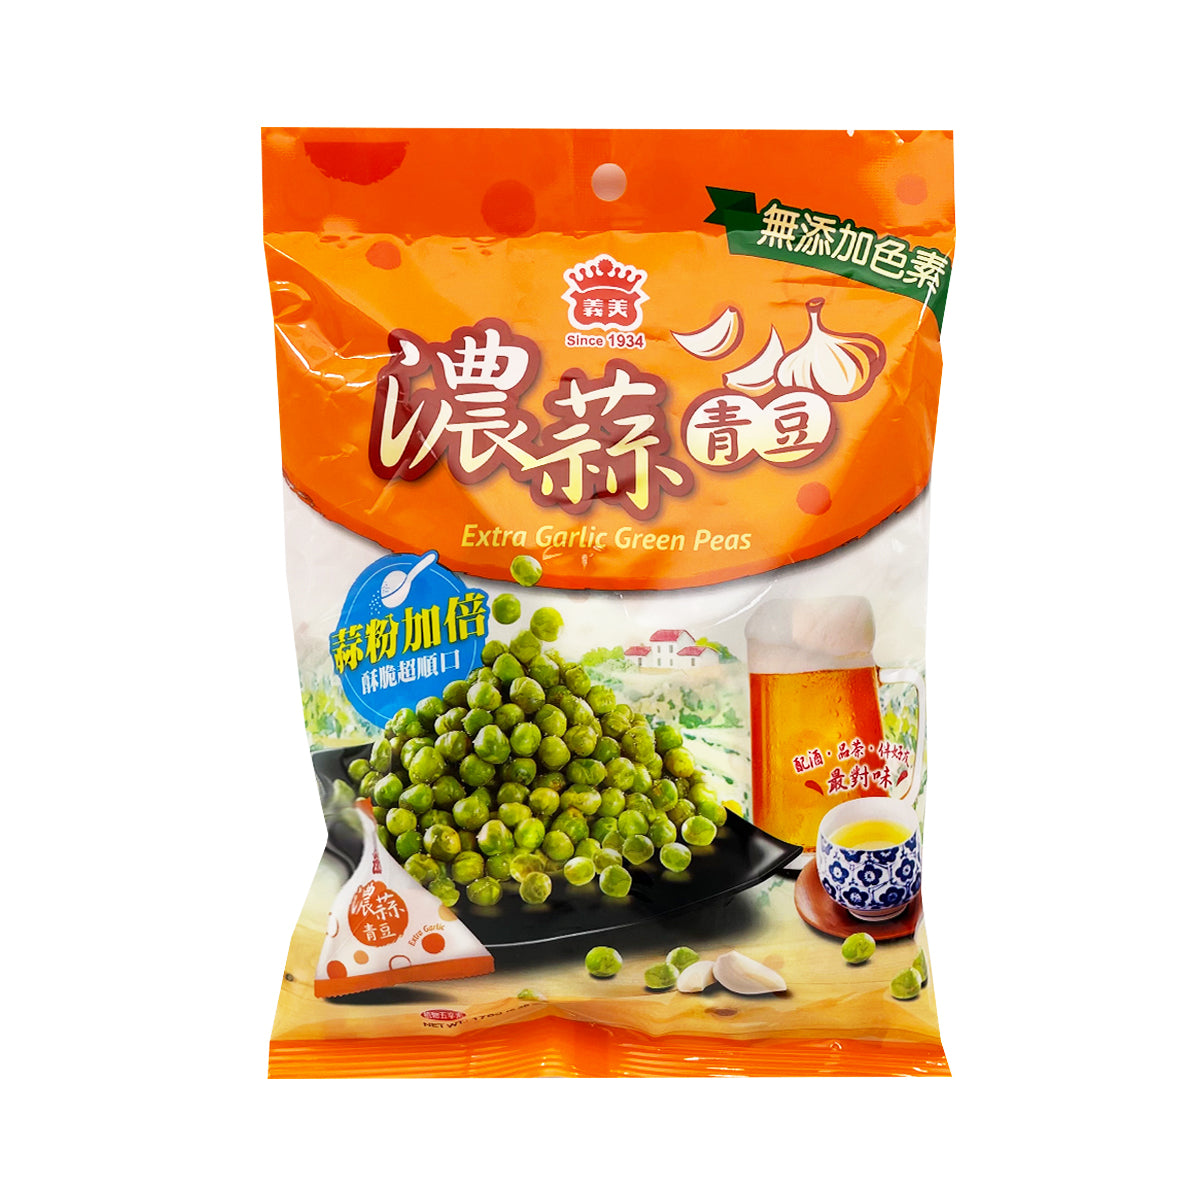 【 I-MEI 】 Extra Garlic Green Peas 178g 7pcs